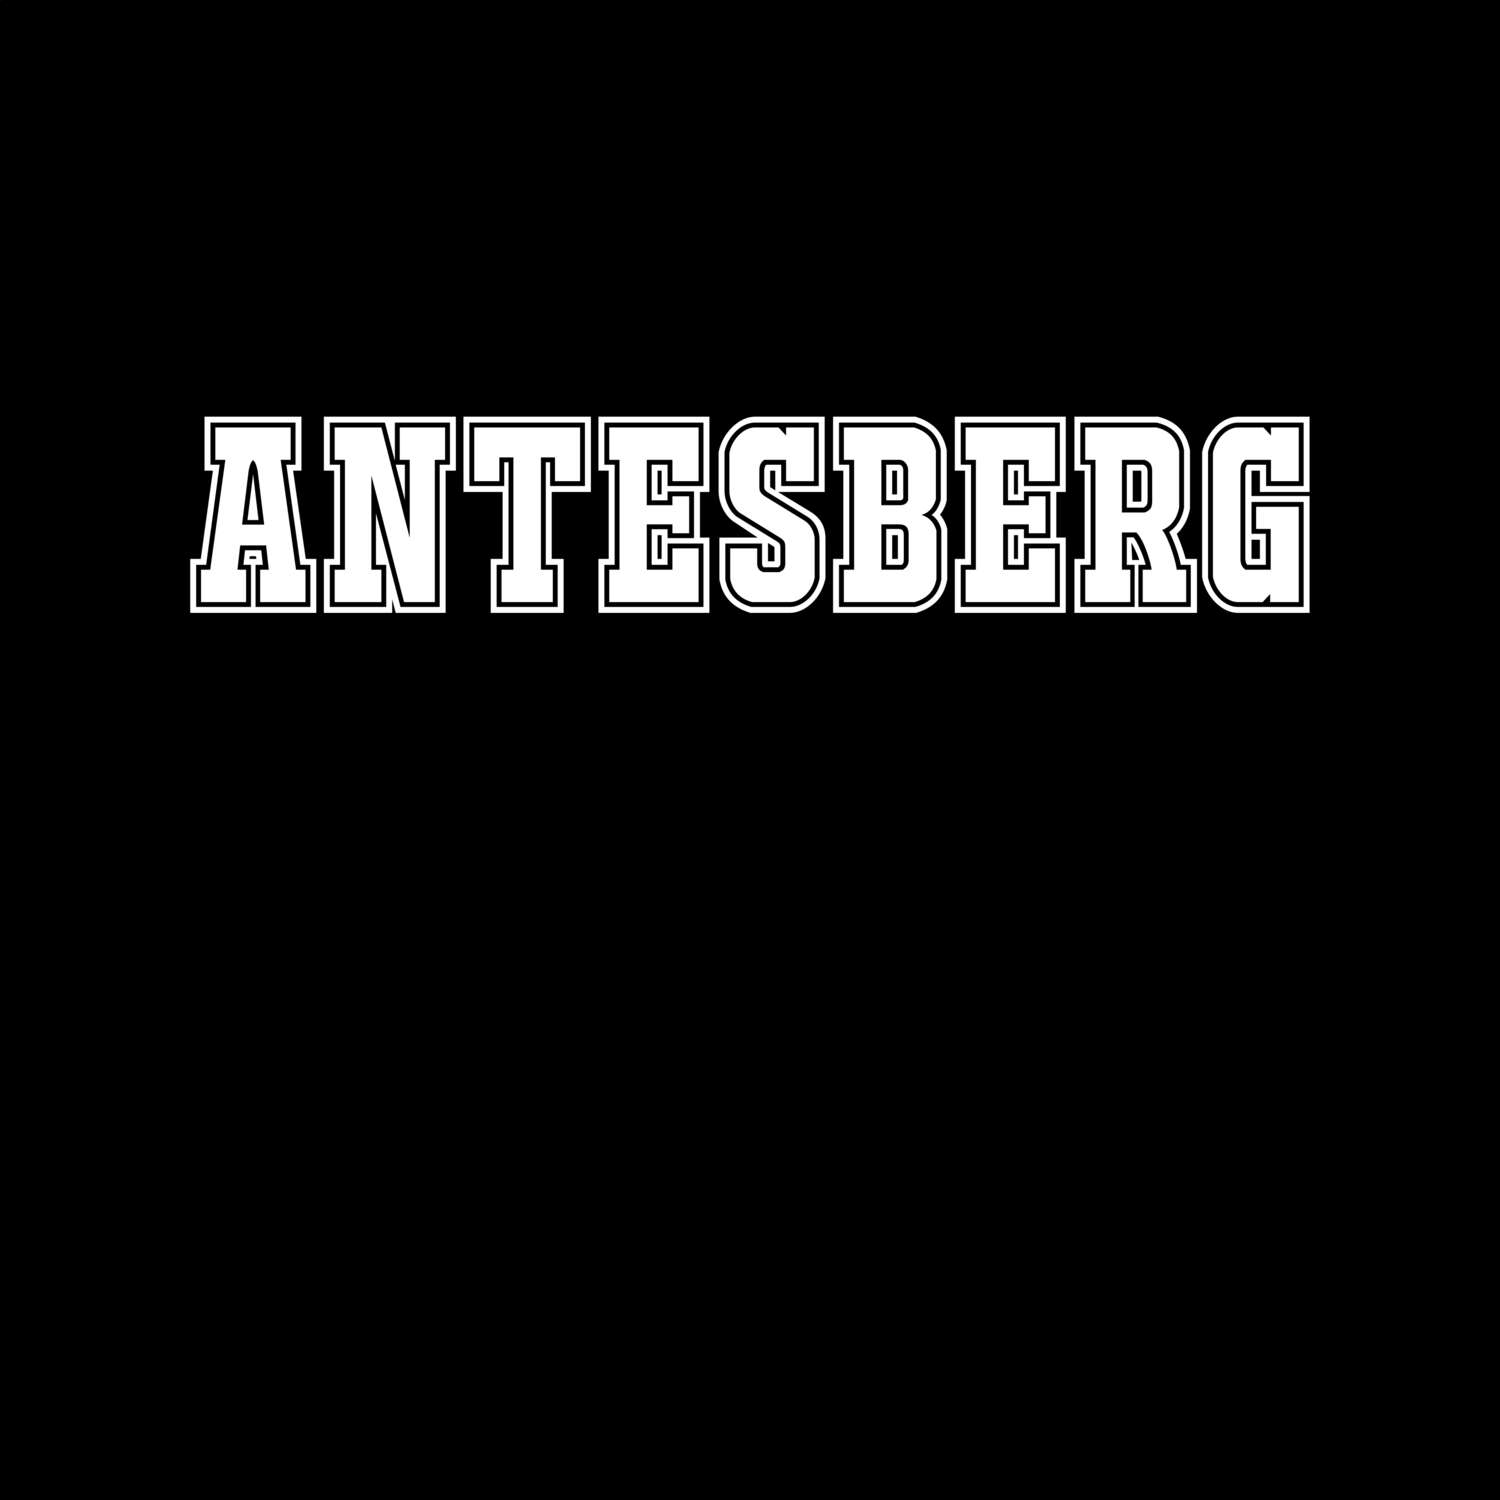 Antesberg T-Shirt »Classic«